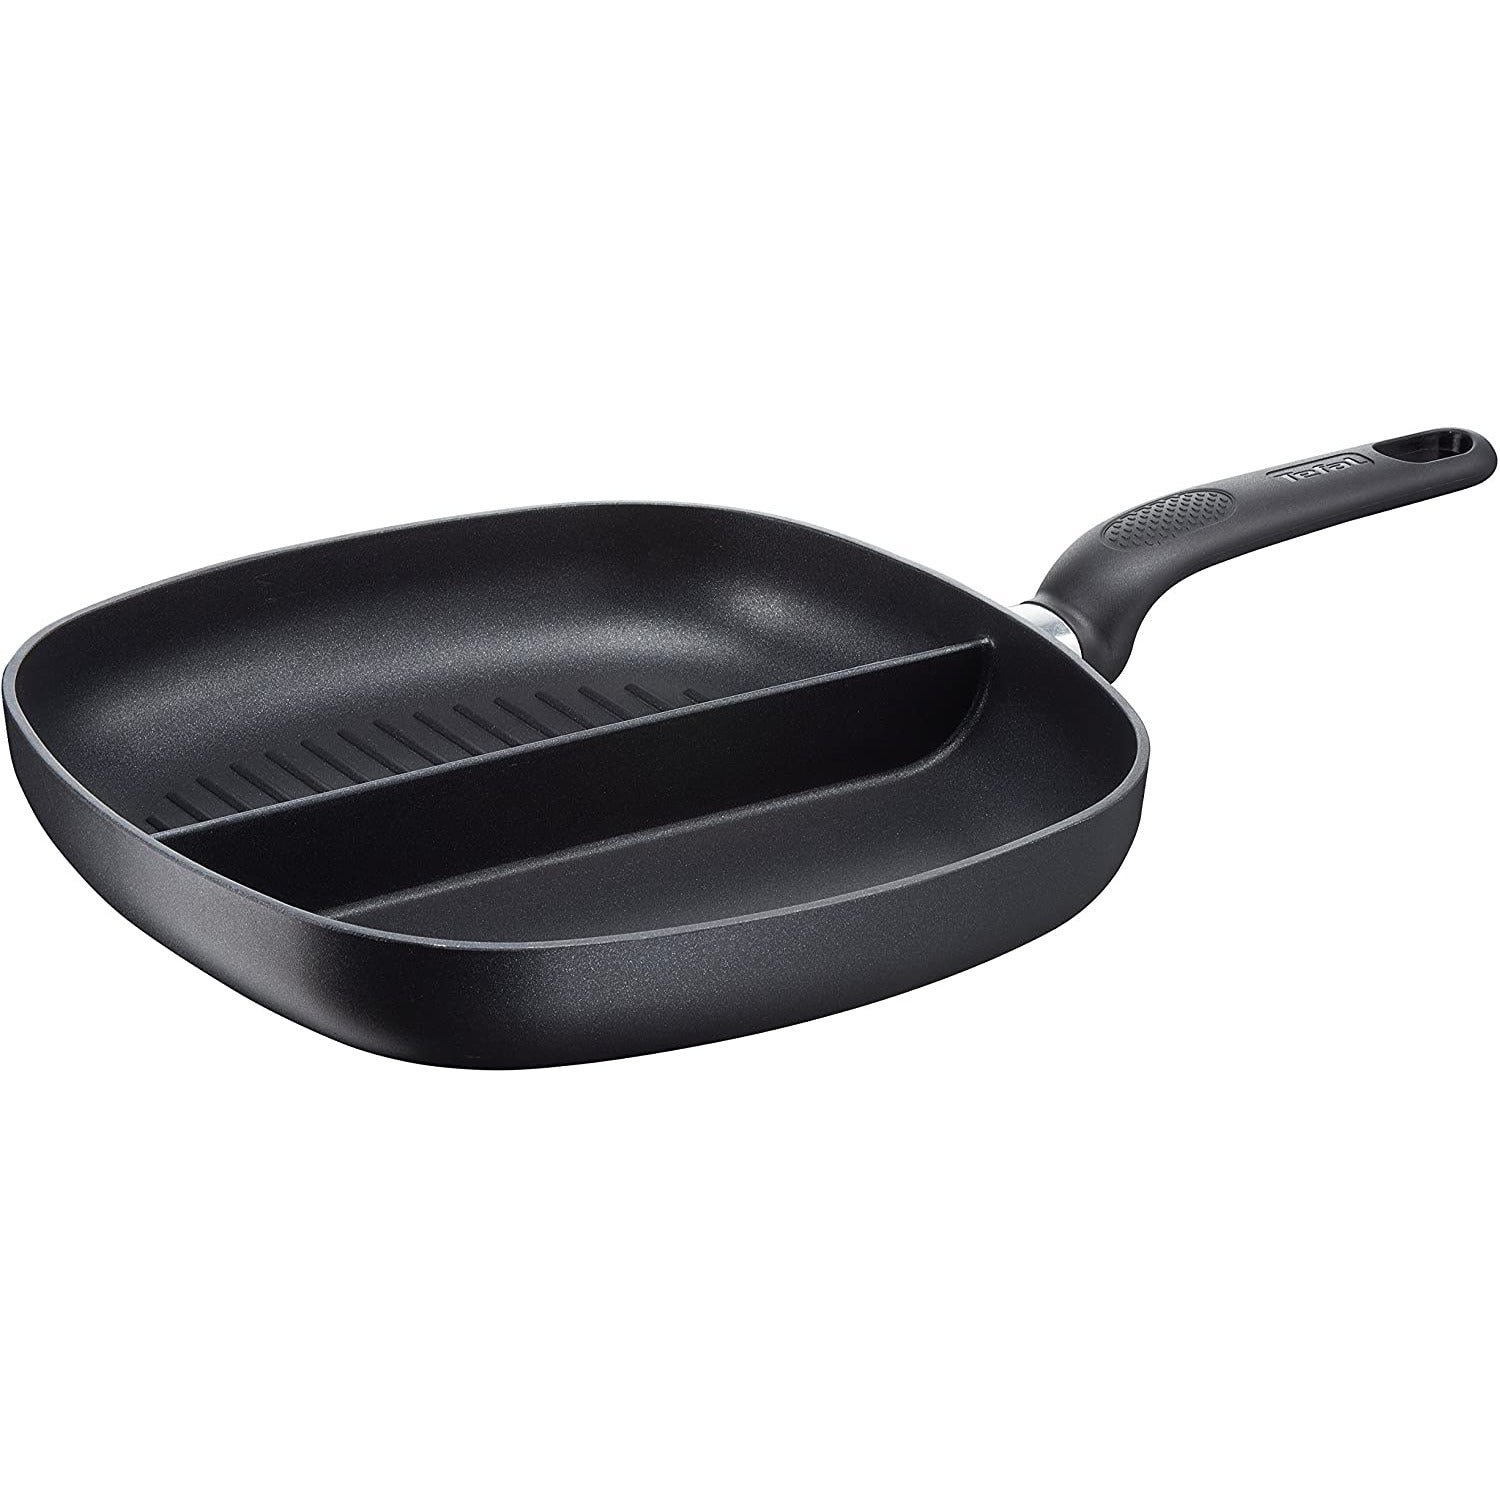 Tefal A1989014 Divided Frying Pan, Black